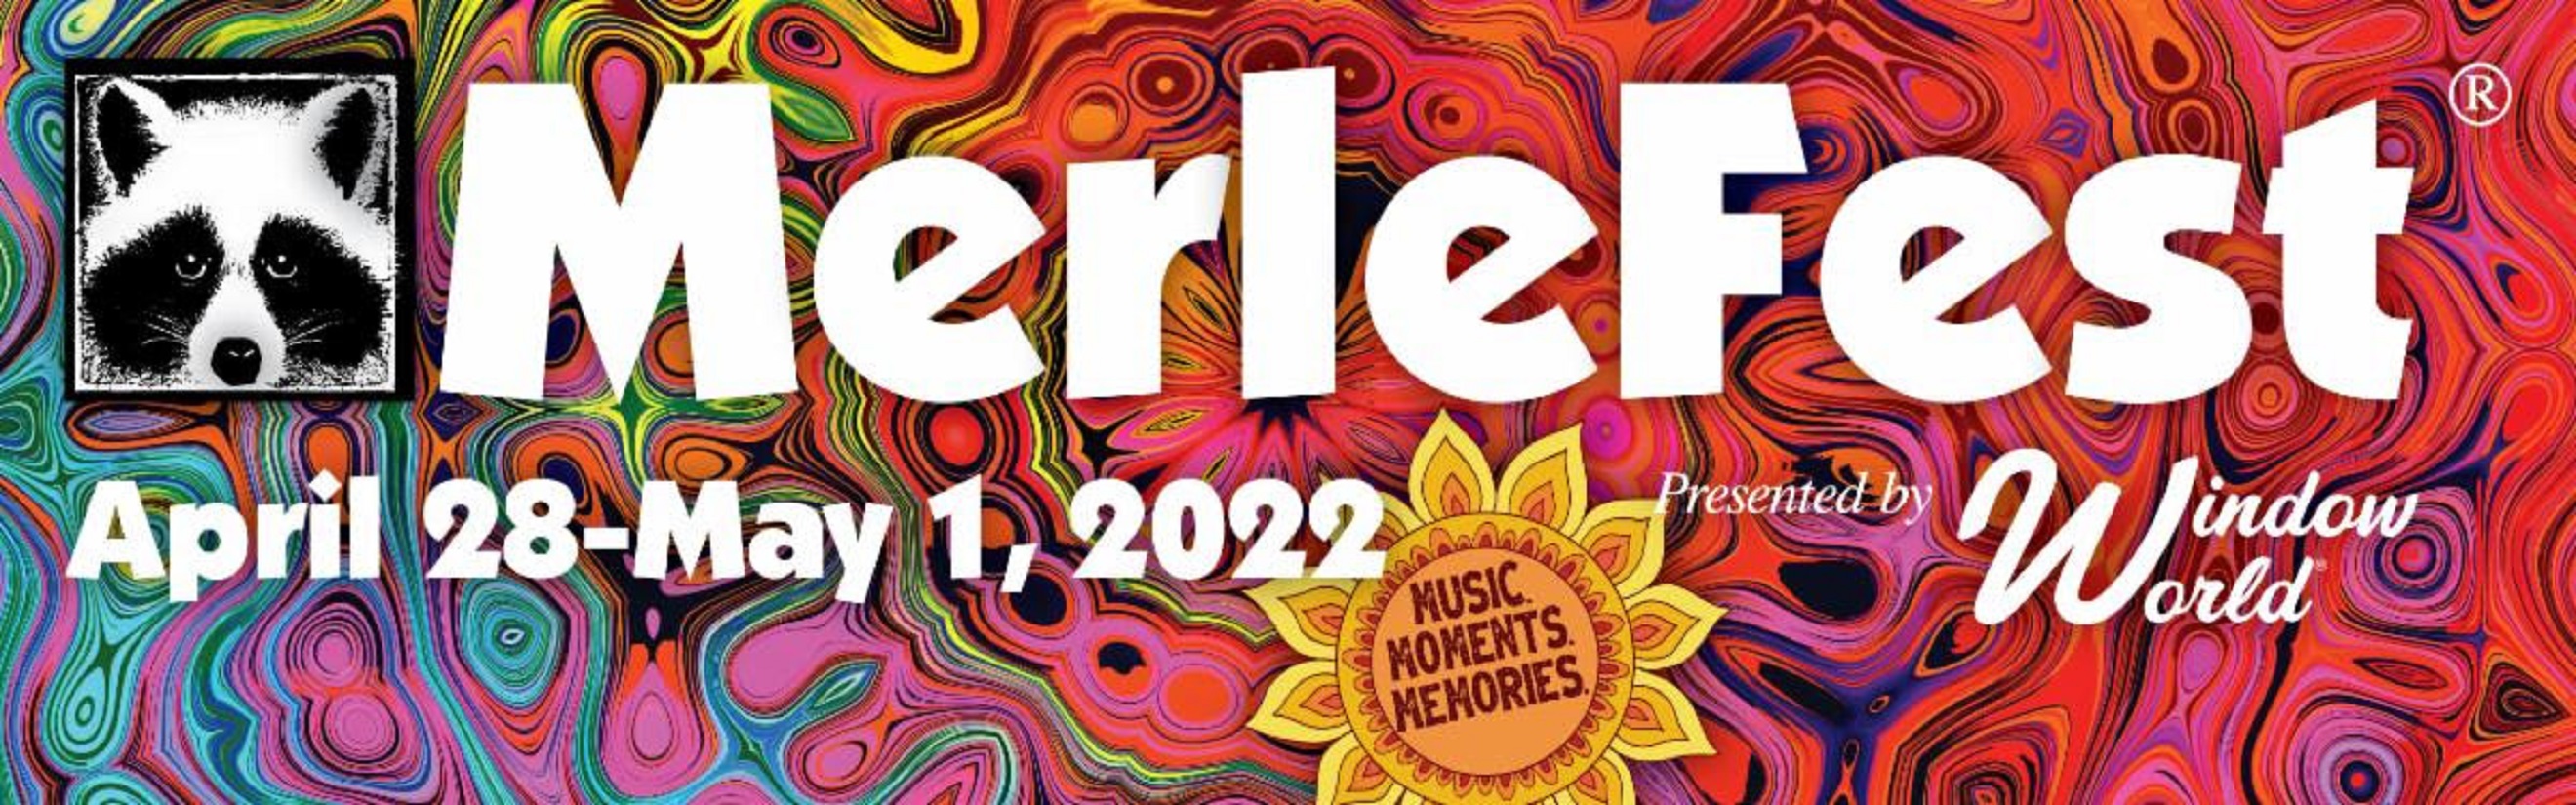 Merlefest 2022 Schedule Merlefest Shares Initial Lineup For 2022 Festival | Grateful Web